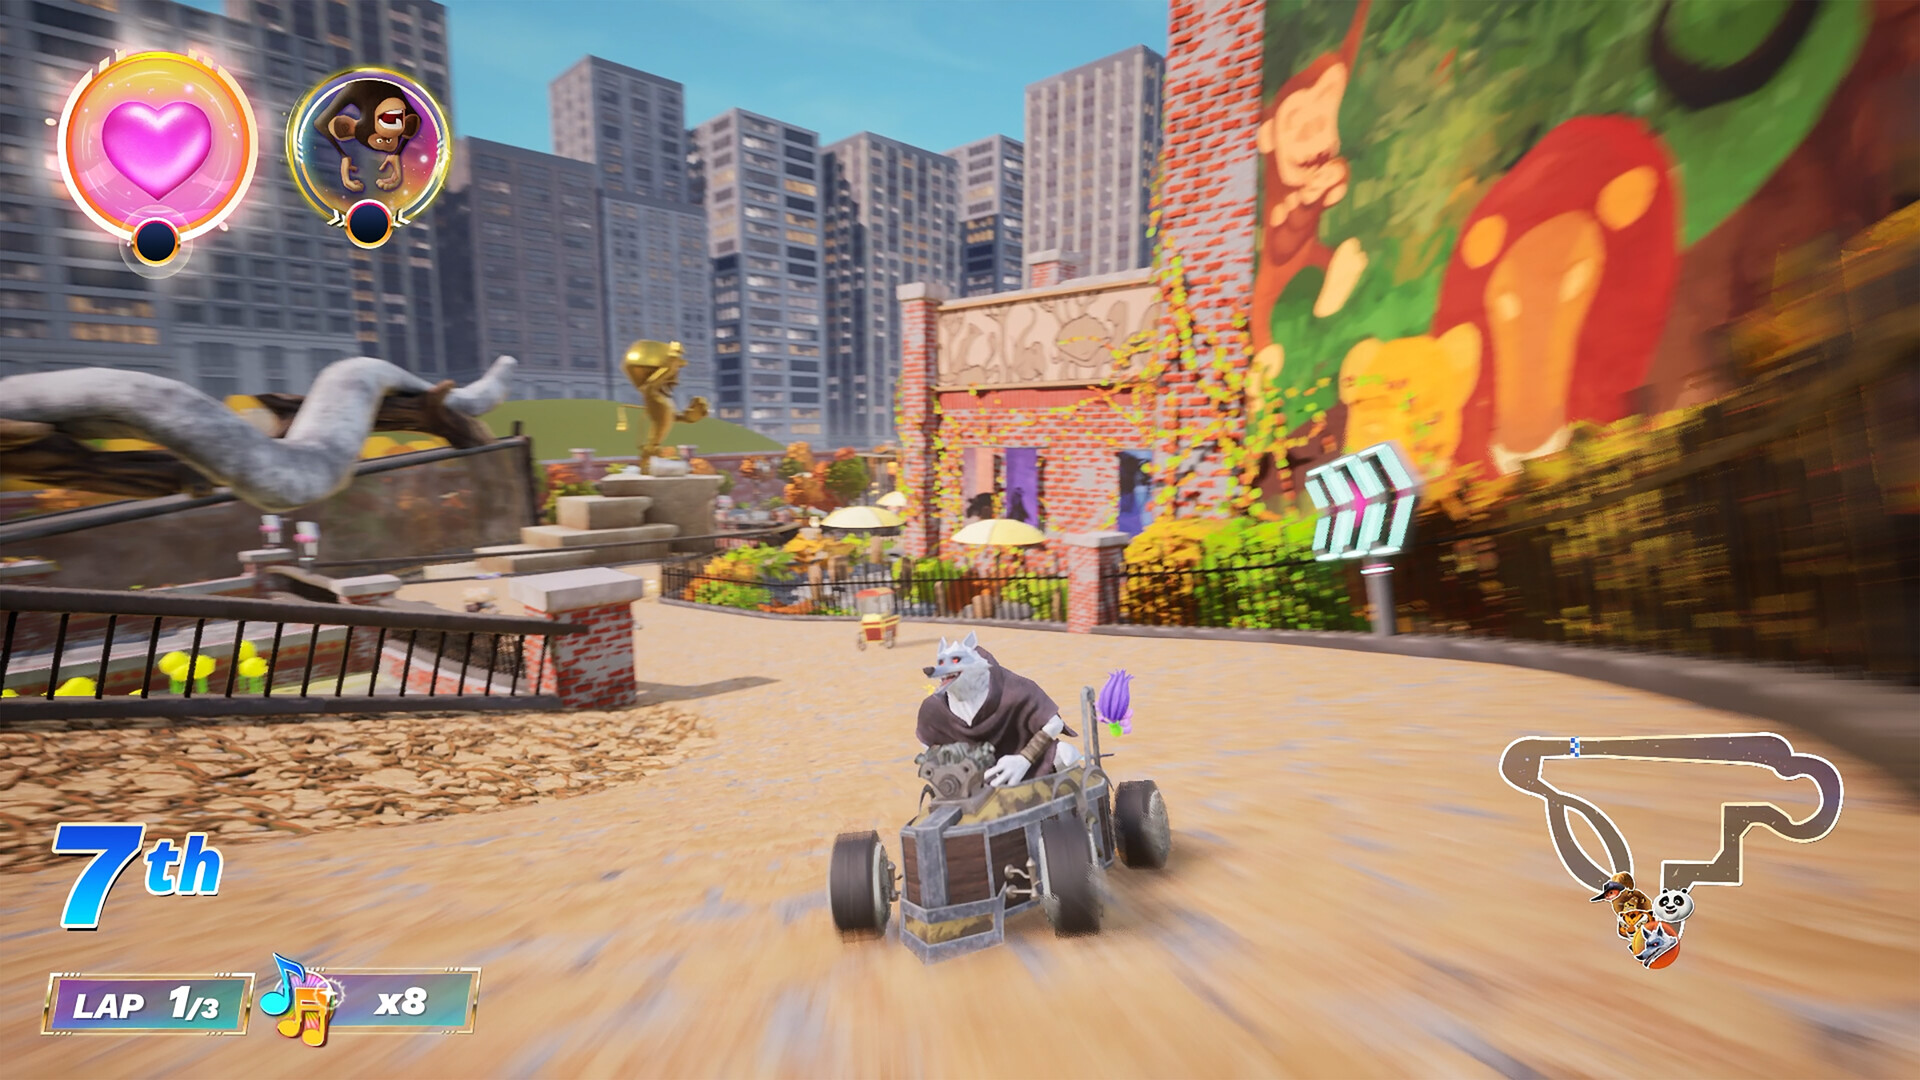 Buy DreamWorks All-Star Kart Racing Steam